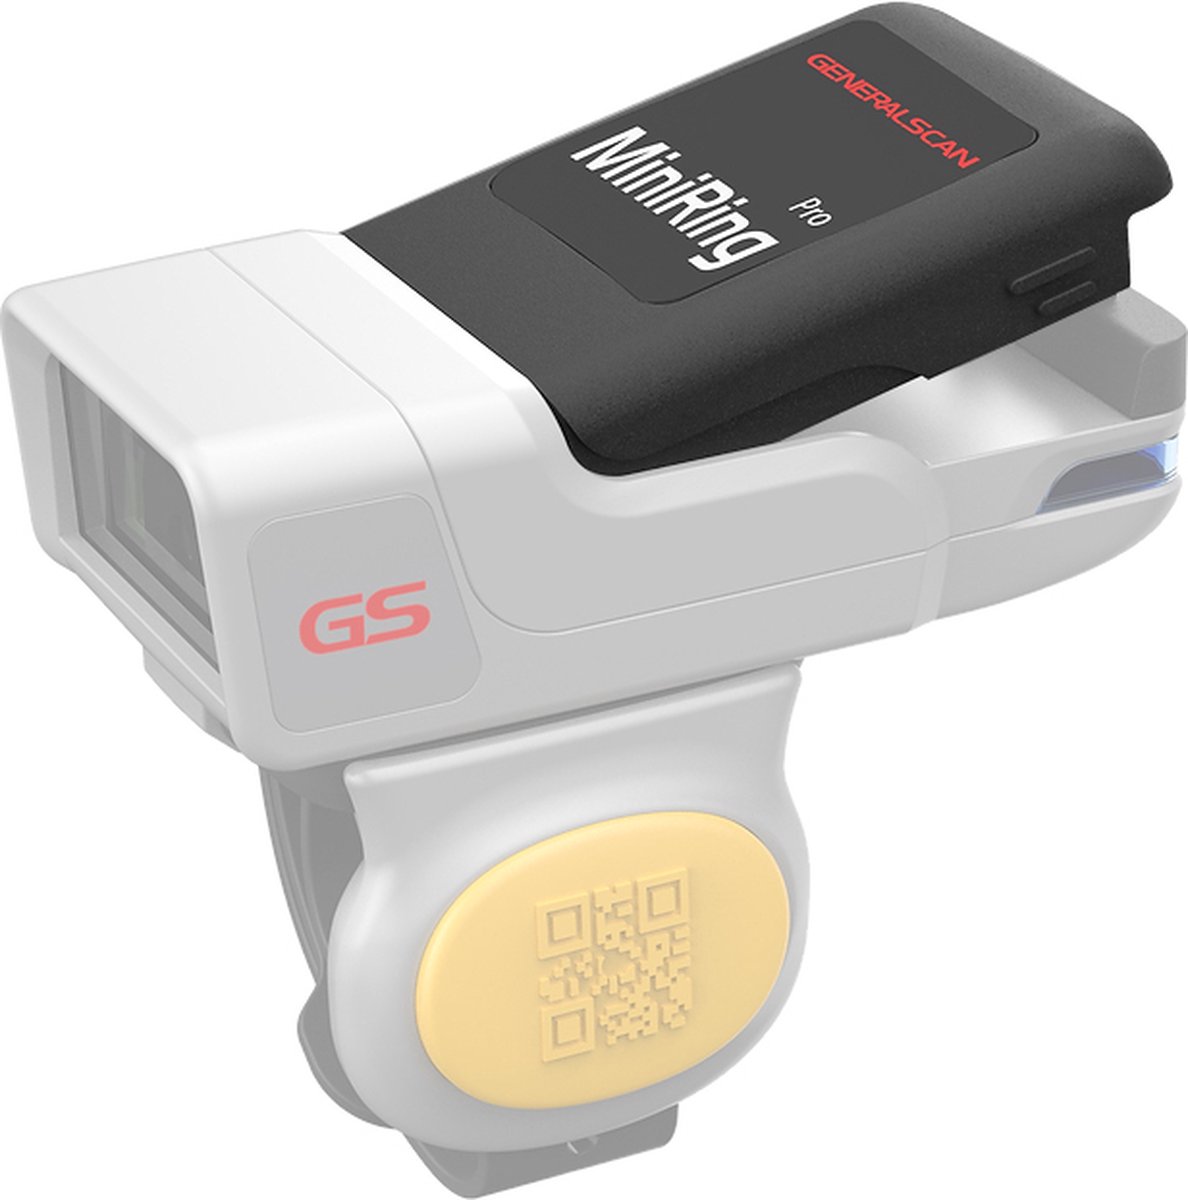 Generalscan - Extra Battery - Ringscanner - Barcode Scanner - Accessoires